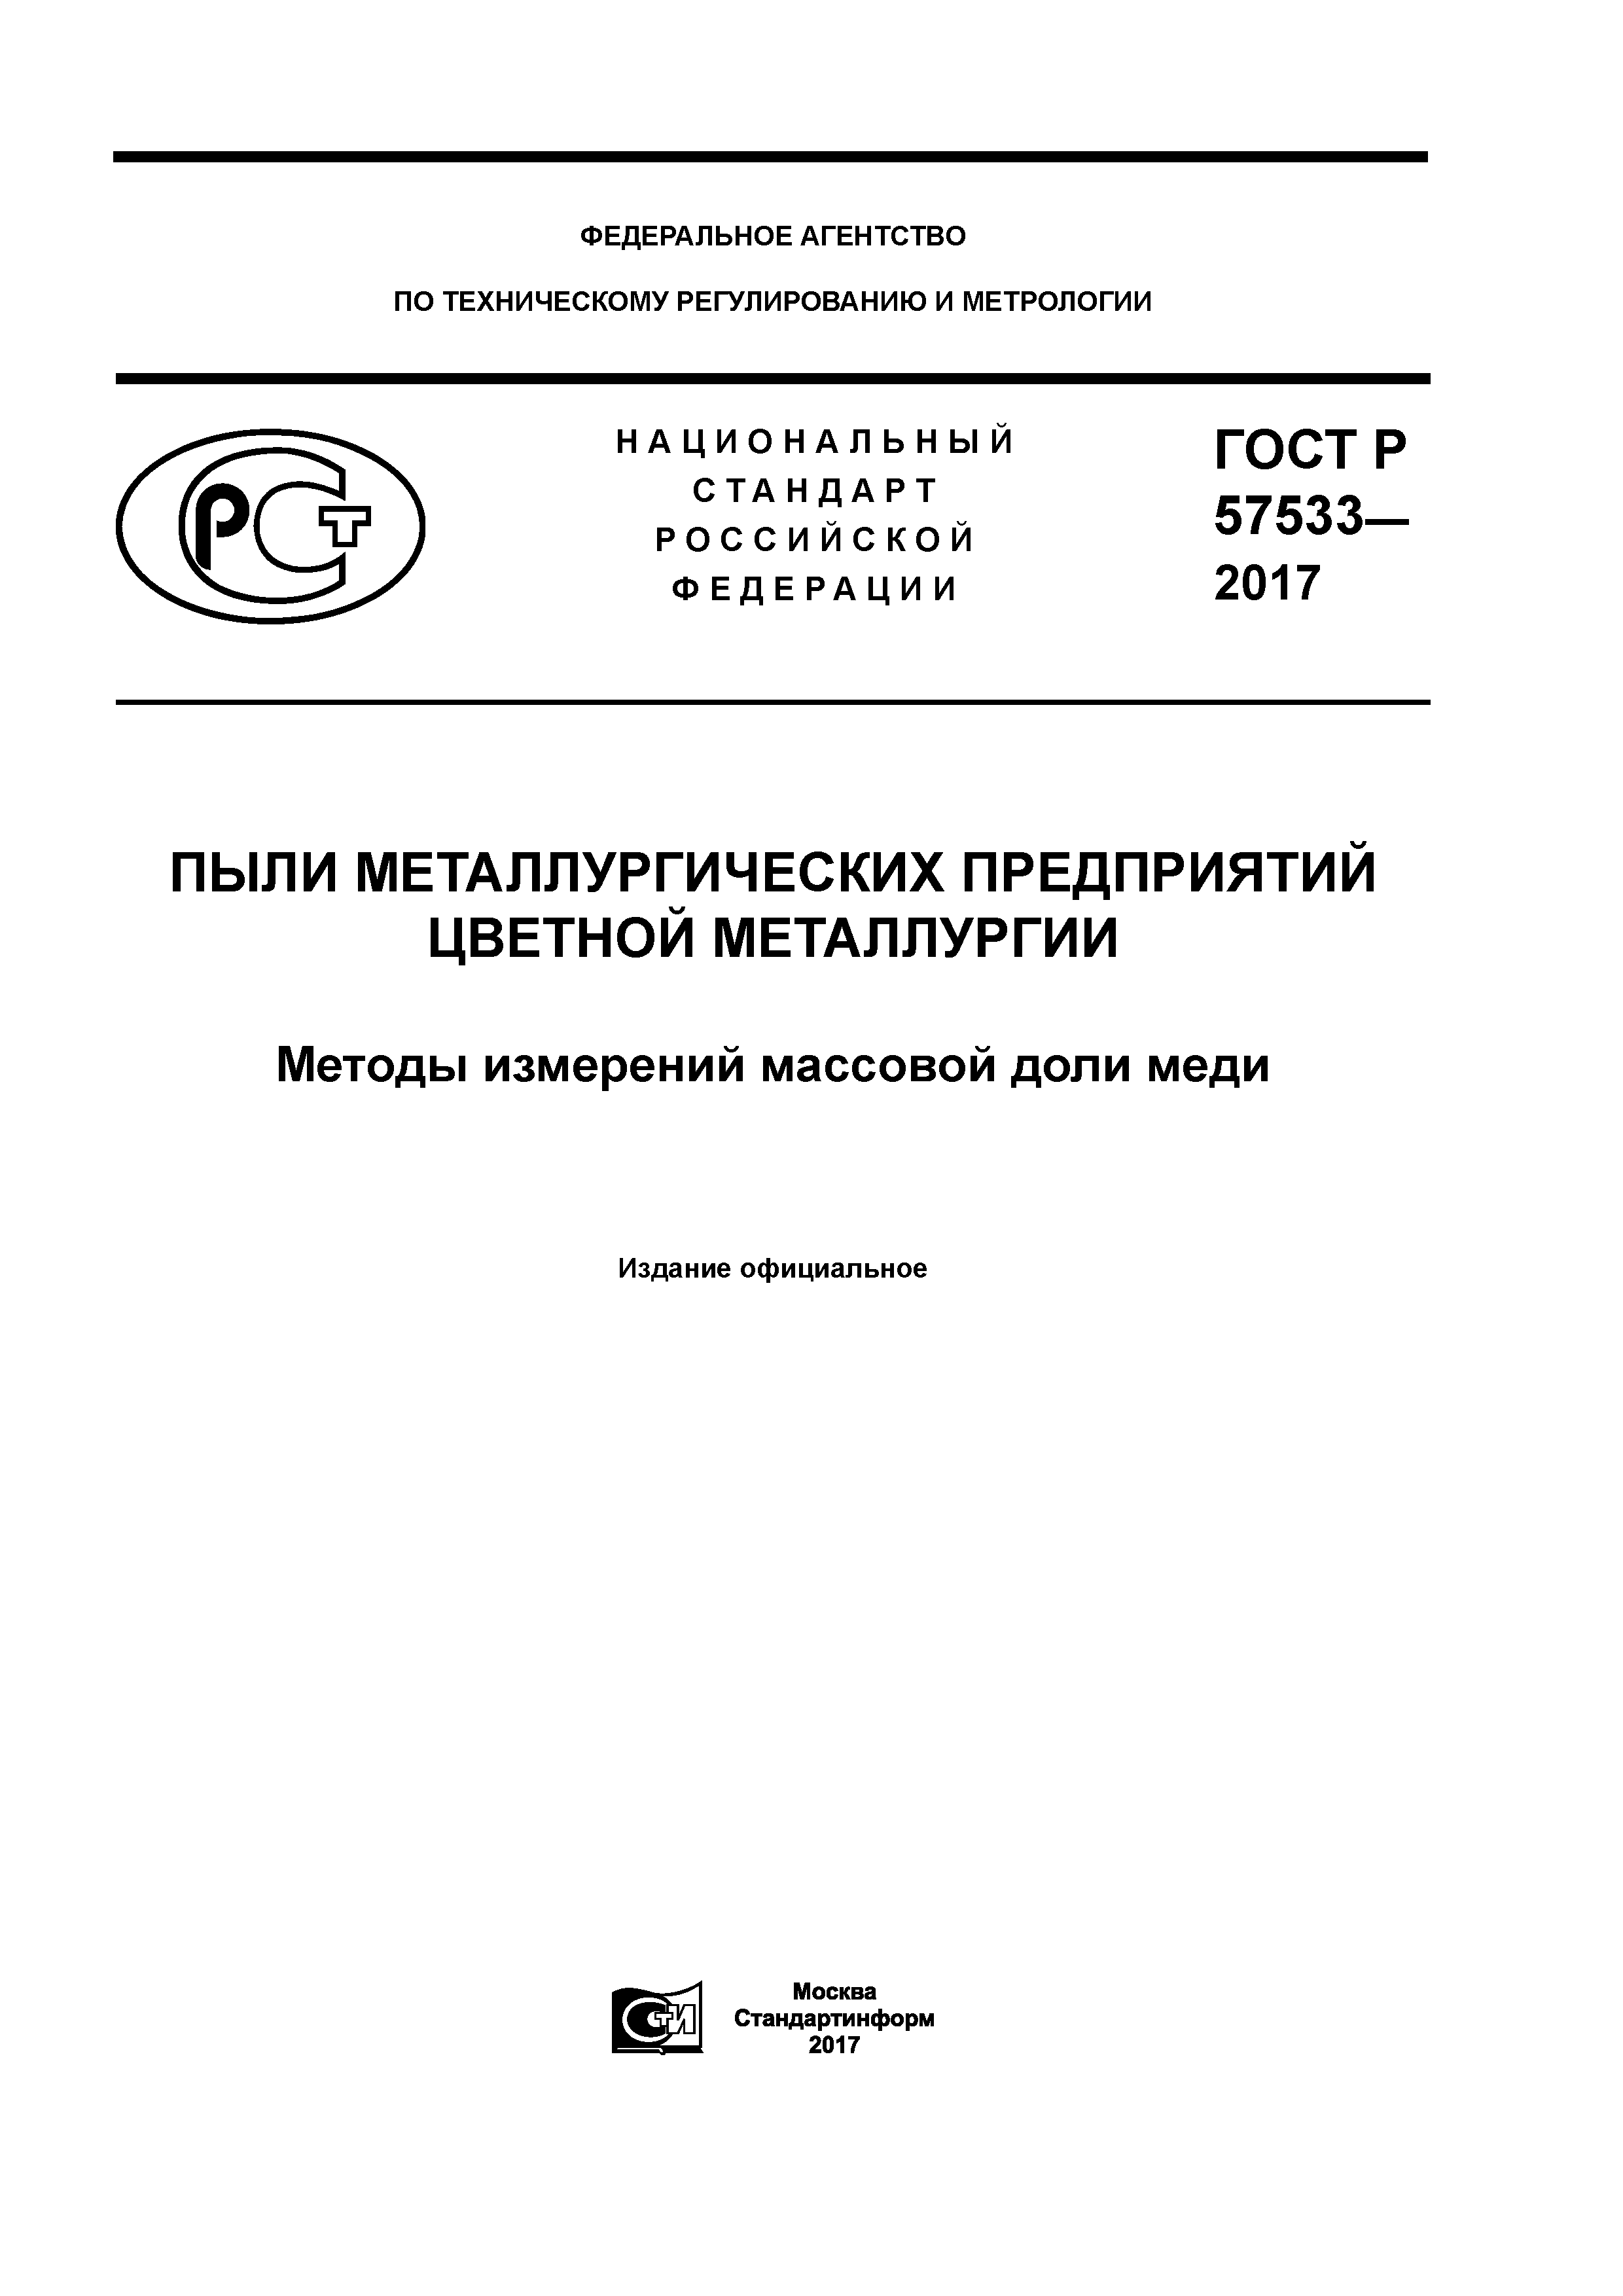 ГОСТ Р 57533-2017